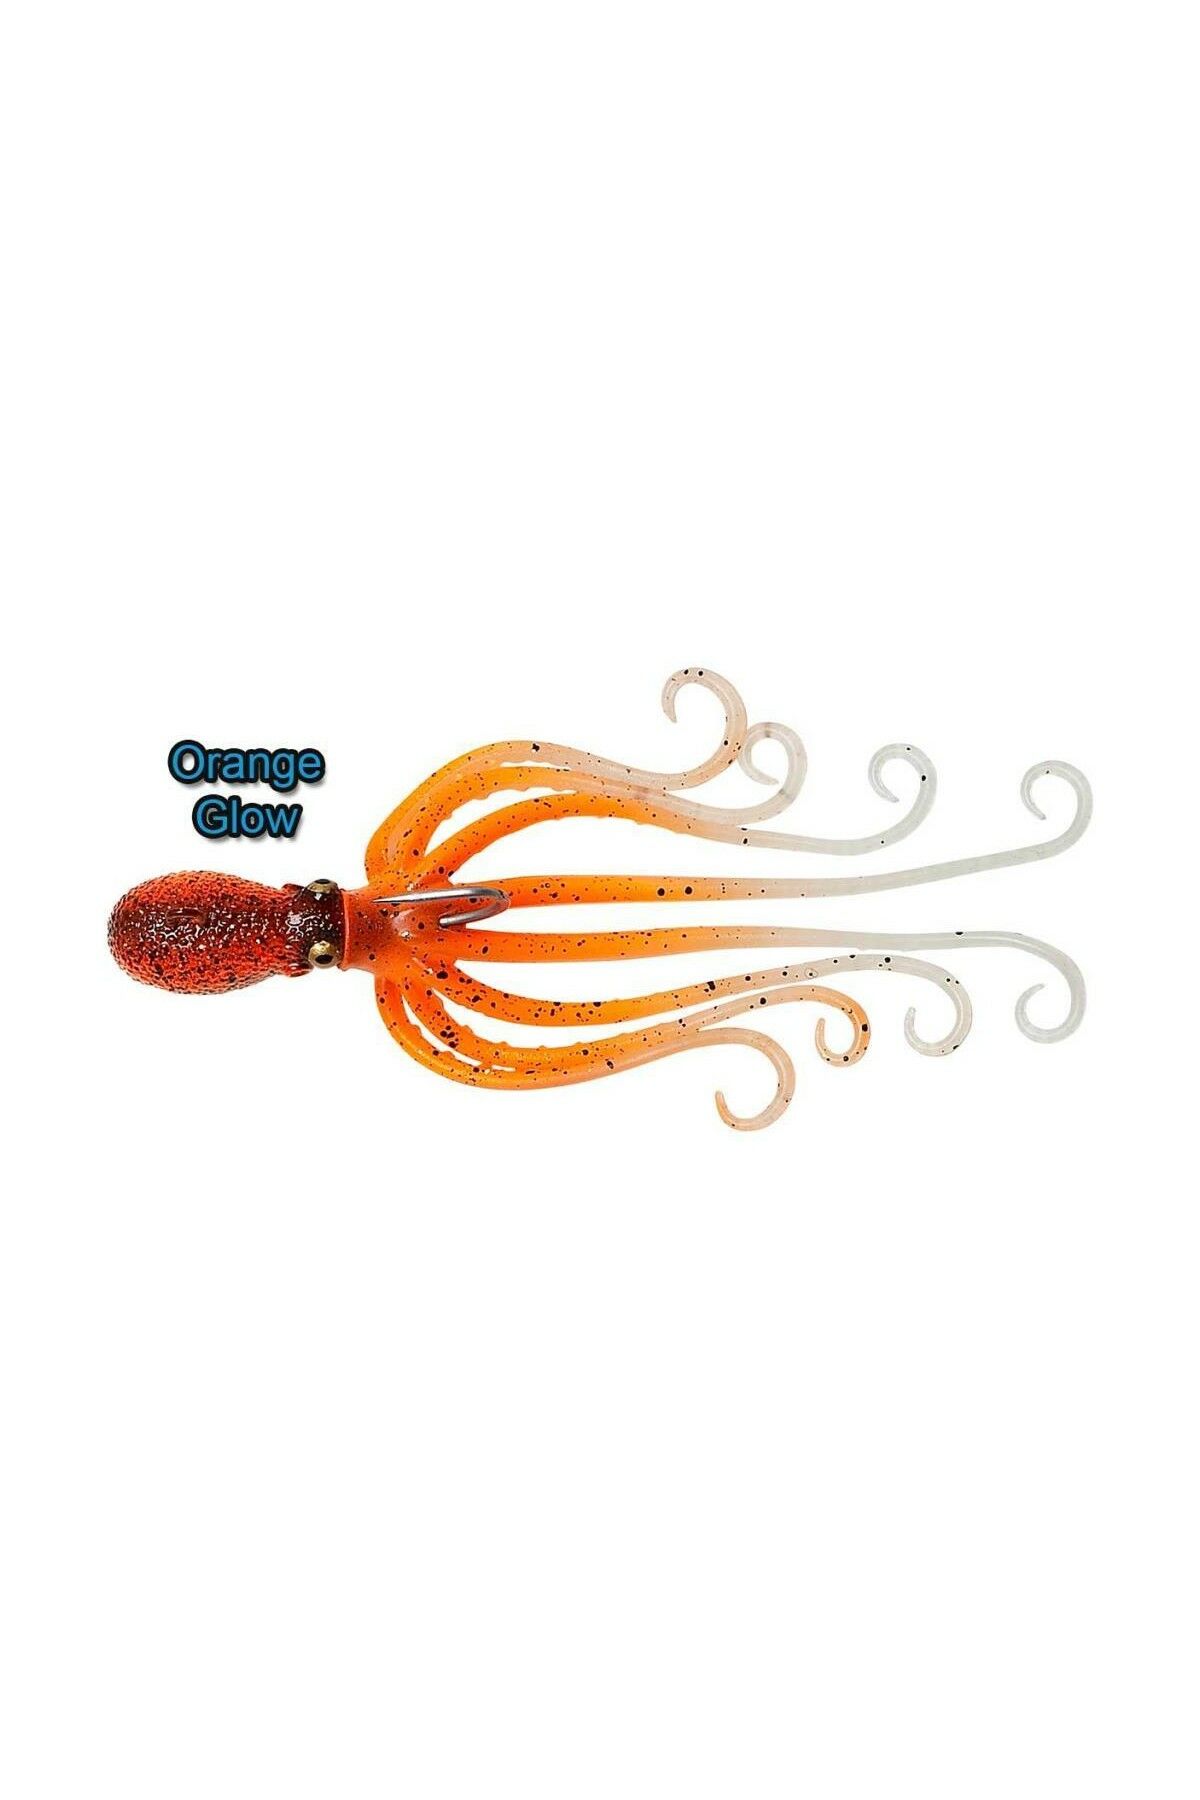 Savage Gear Octopus 35 Gr 10 Cm Suni Yem Orange Glow